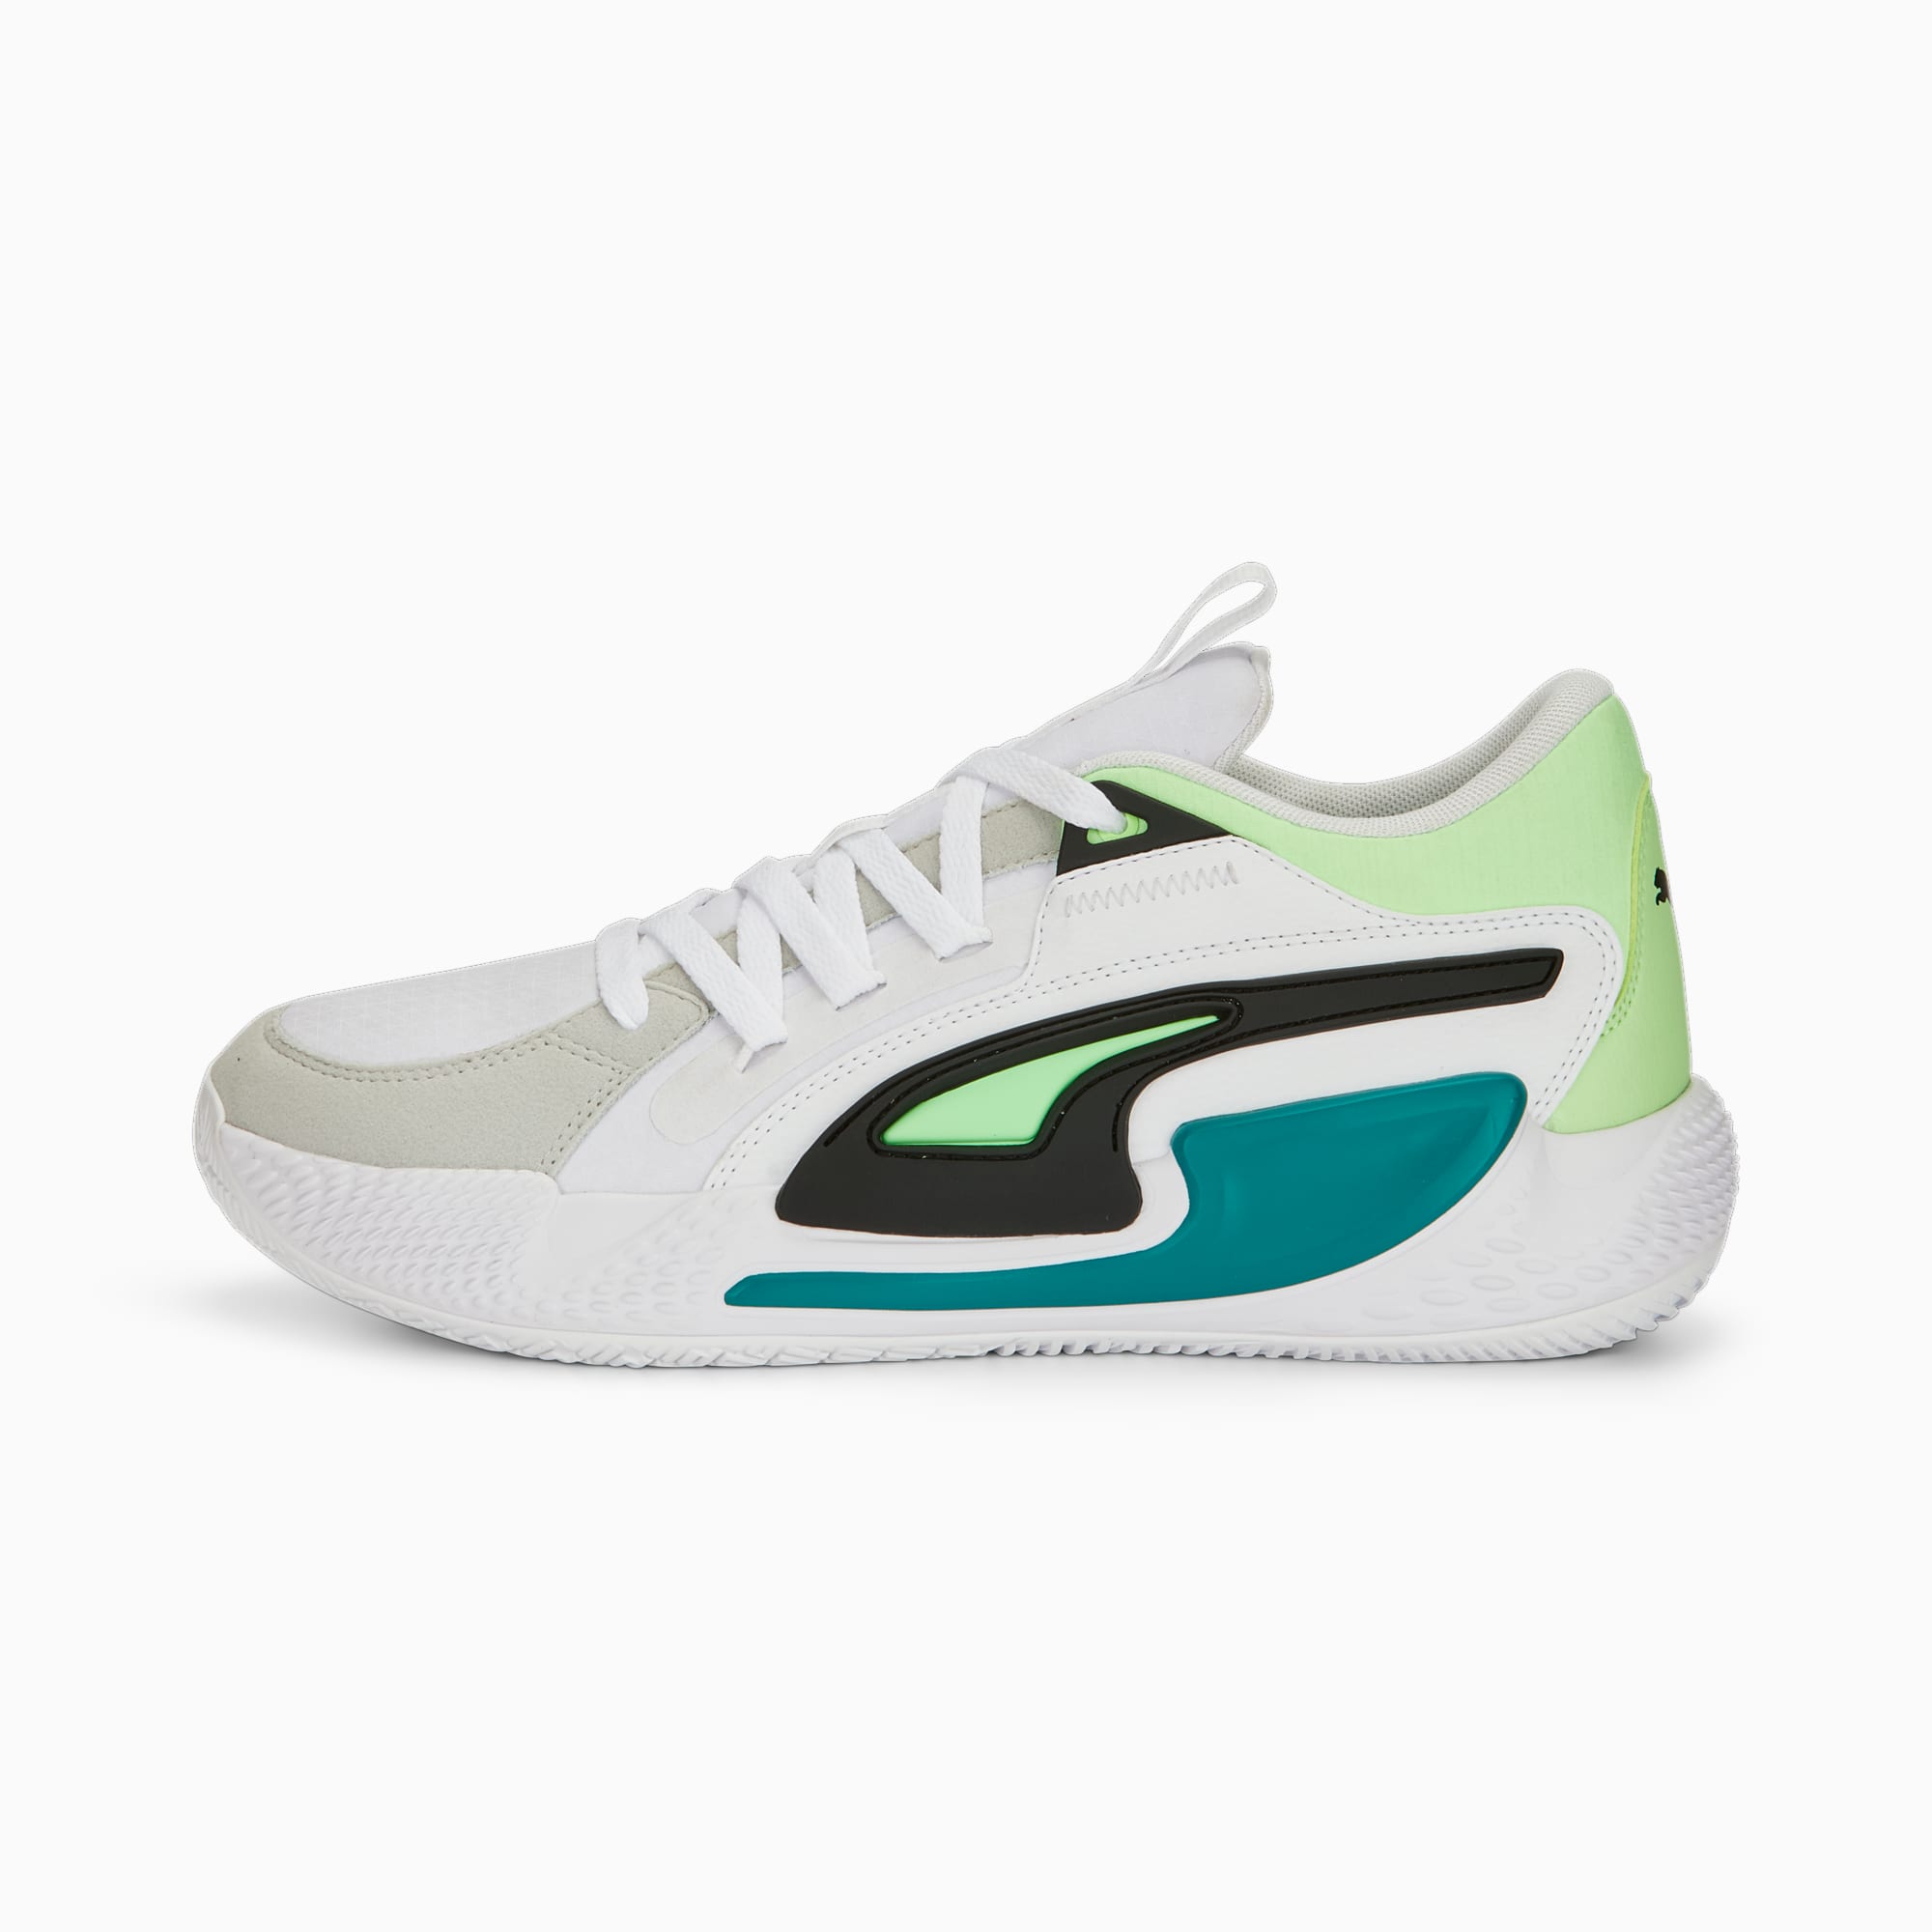 Court Rider Chaos Jewel Basketball Shoes | green | PUMA